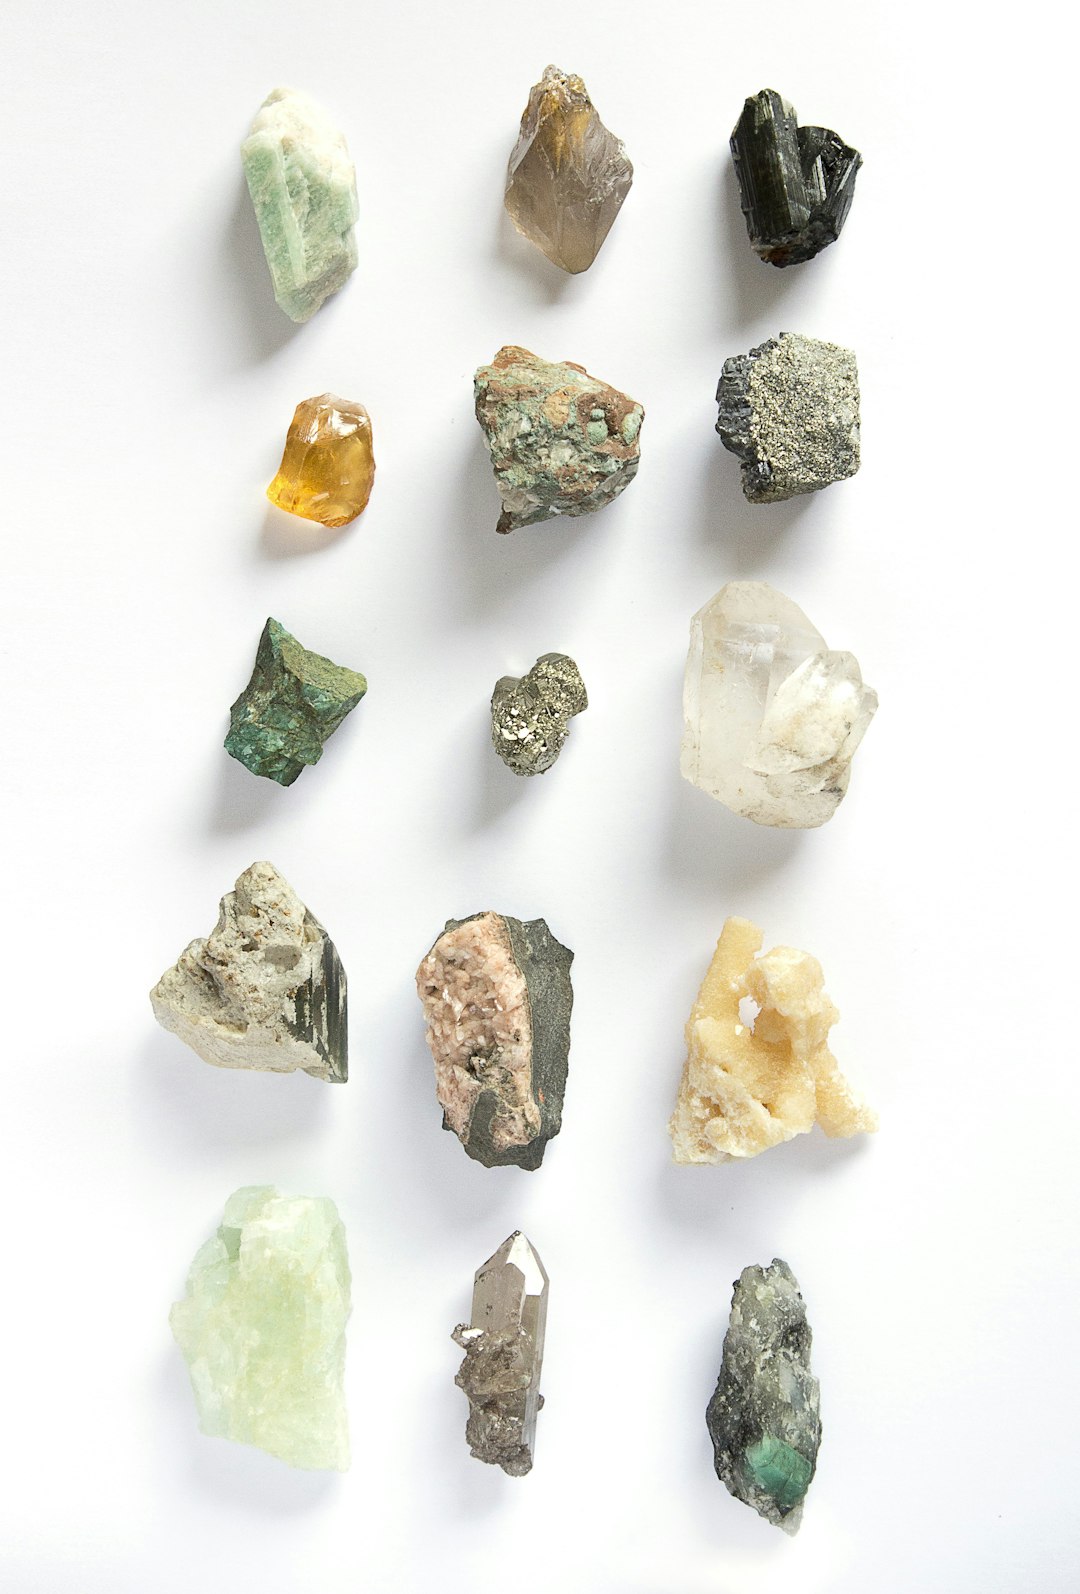 The Symbolism Behind Gemstone Colors